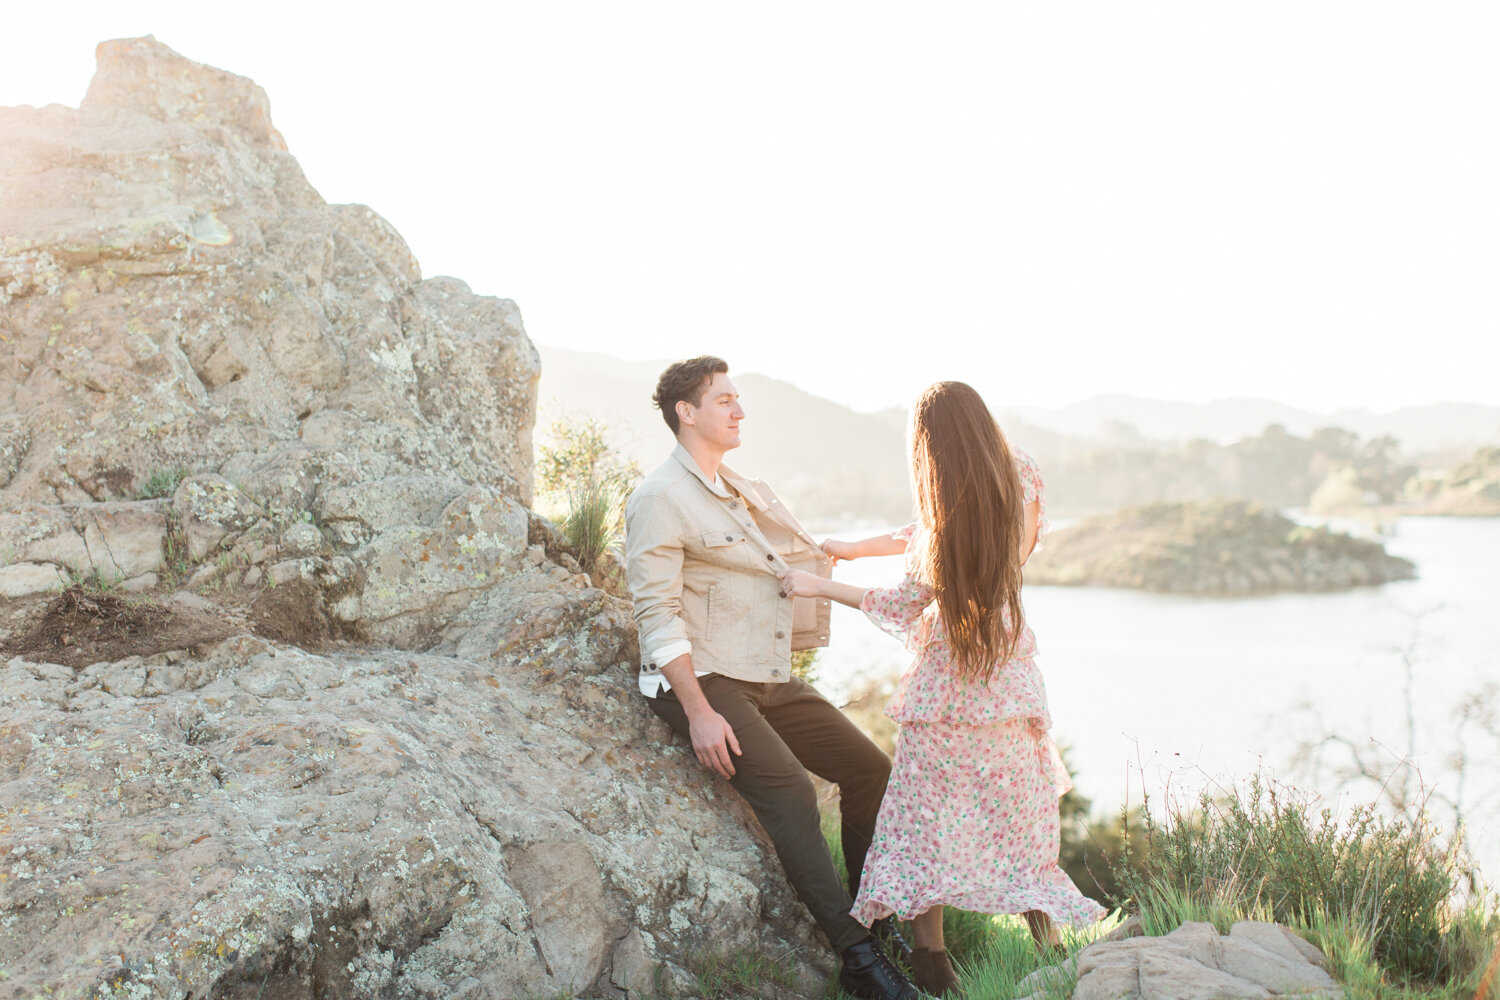 wisteria-photography.com | Wisteria Photography | Lake Sherwood | Weddings Engagement | Southern California Photographer-17.jpg